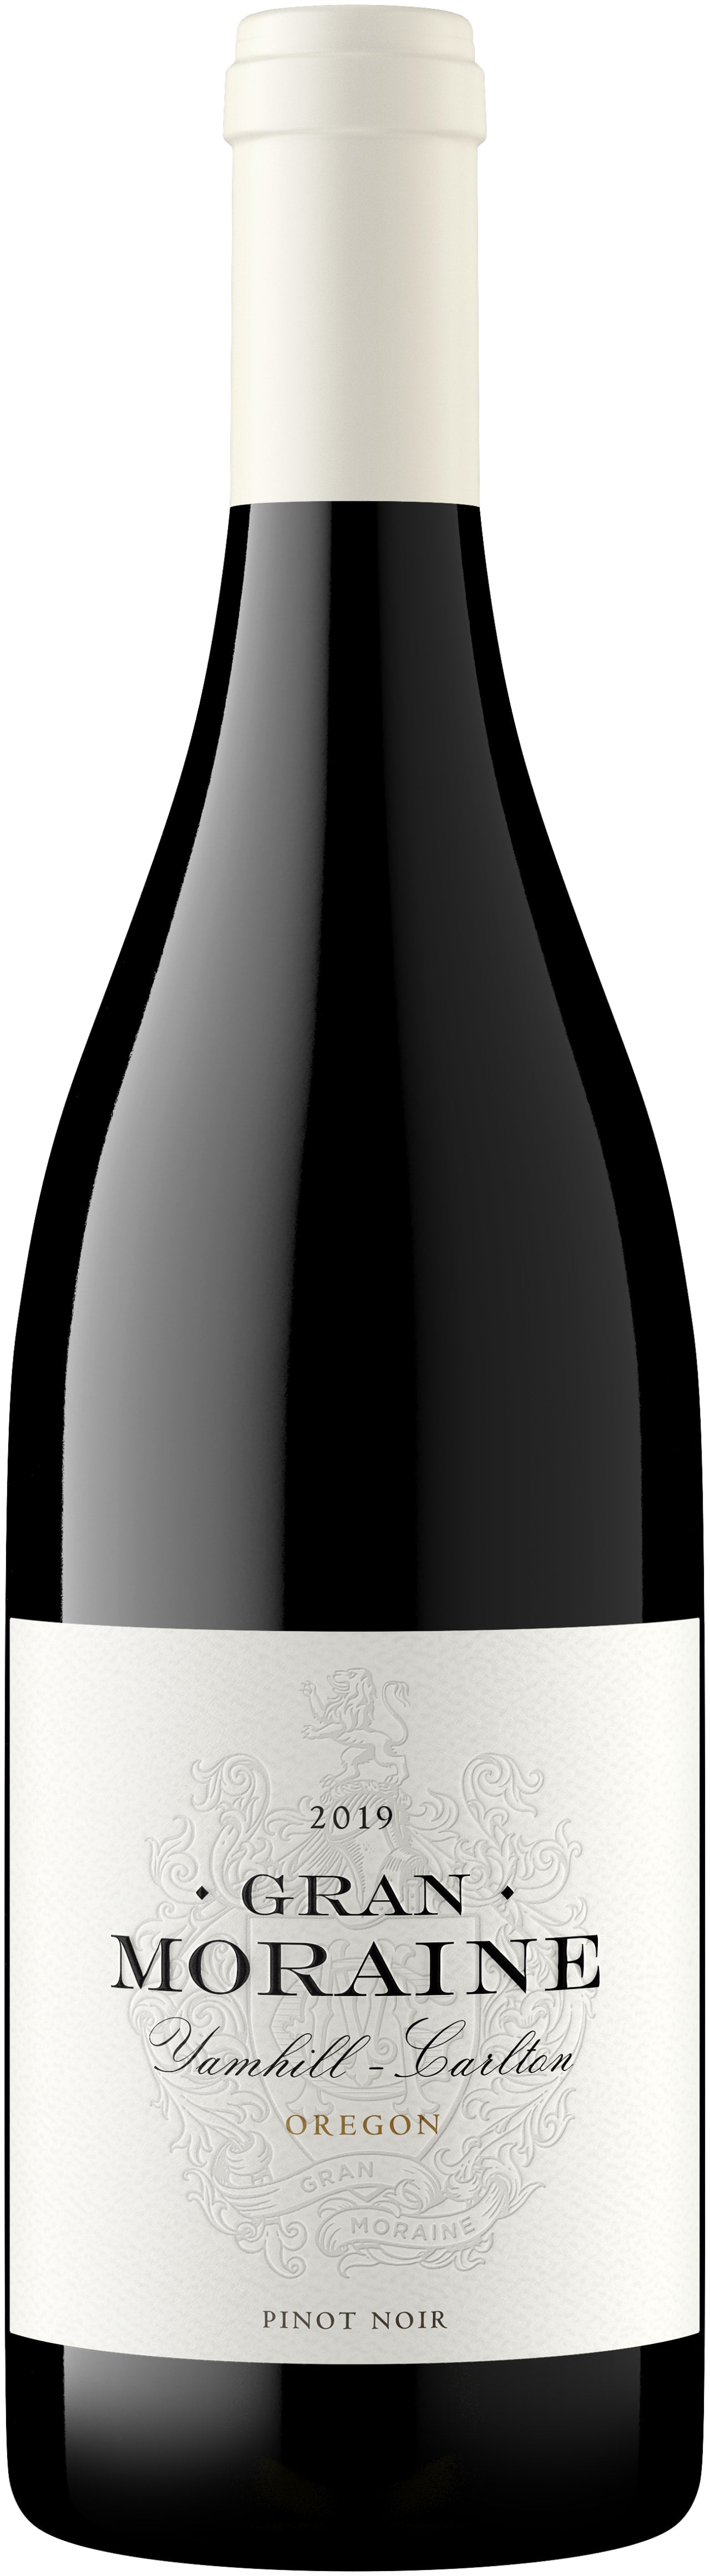 2019 Gran Moraine Pinot Noir